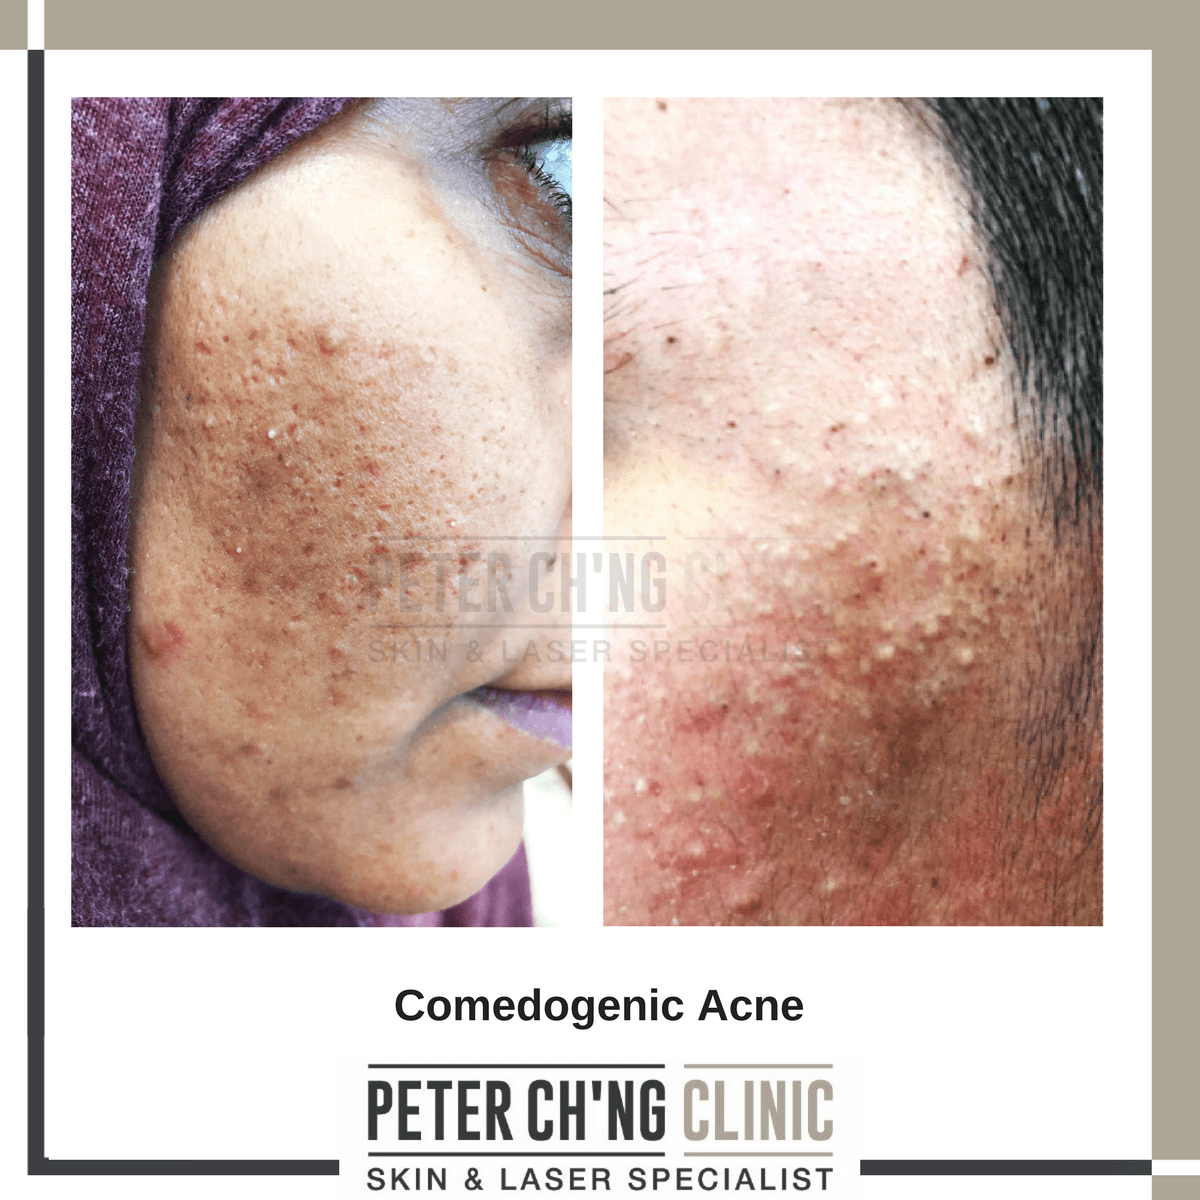 Comedogenic acne